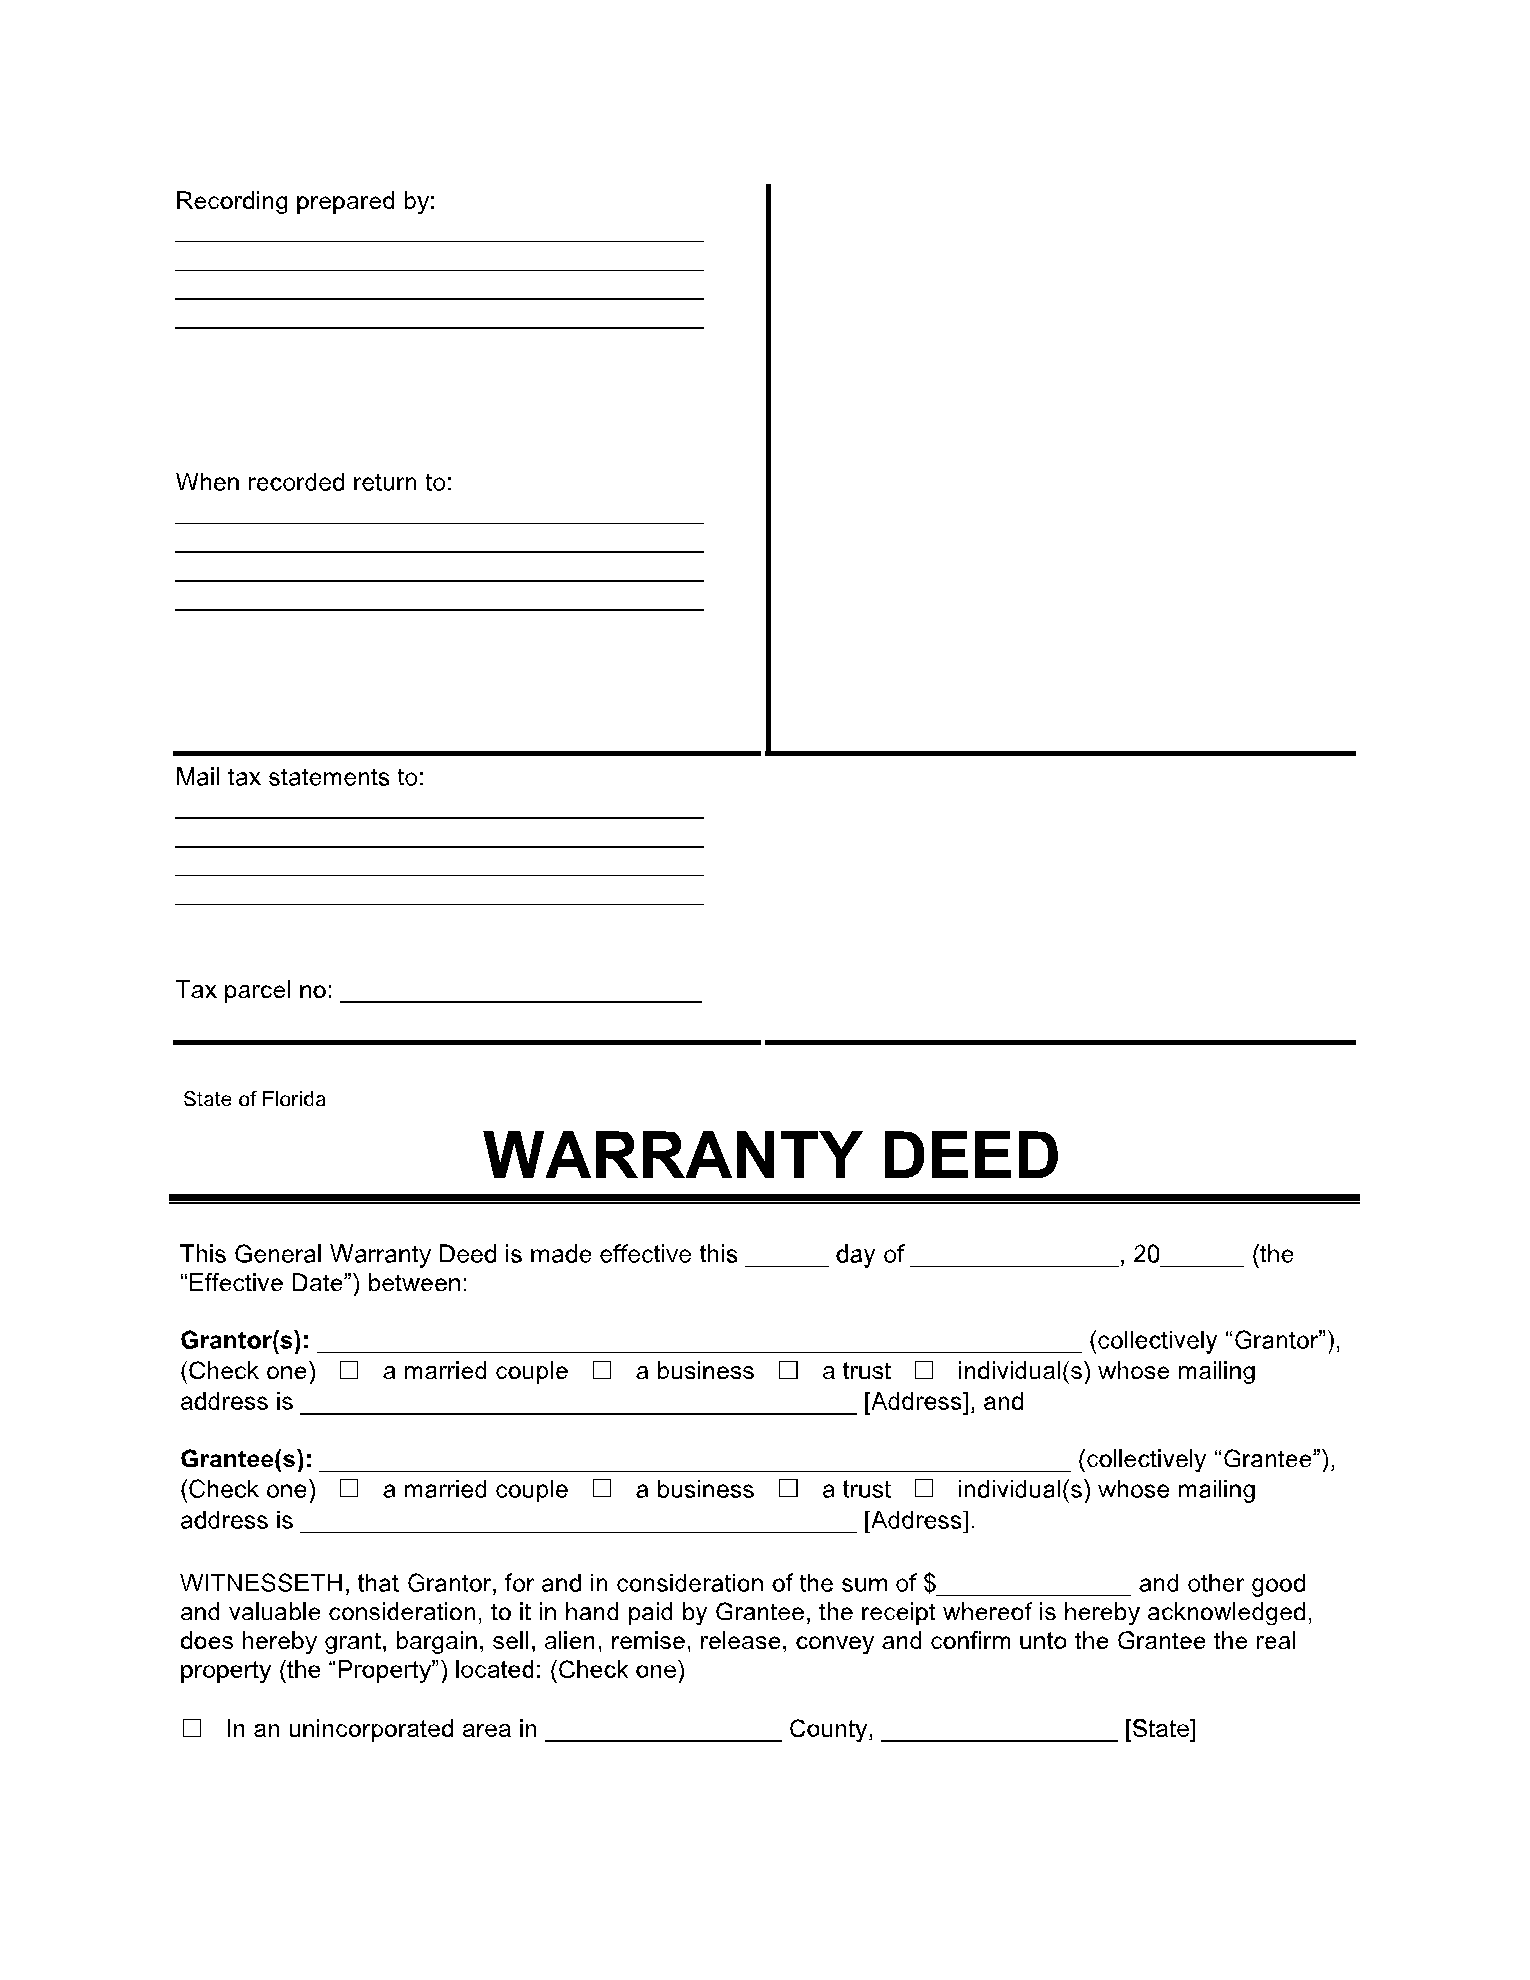 Florida General Warranty Deed Form